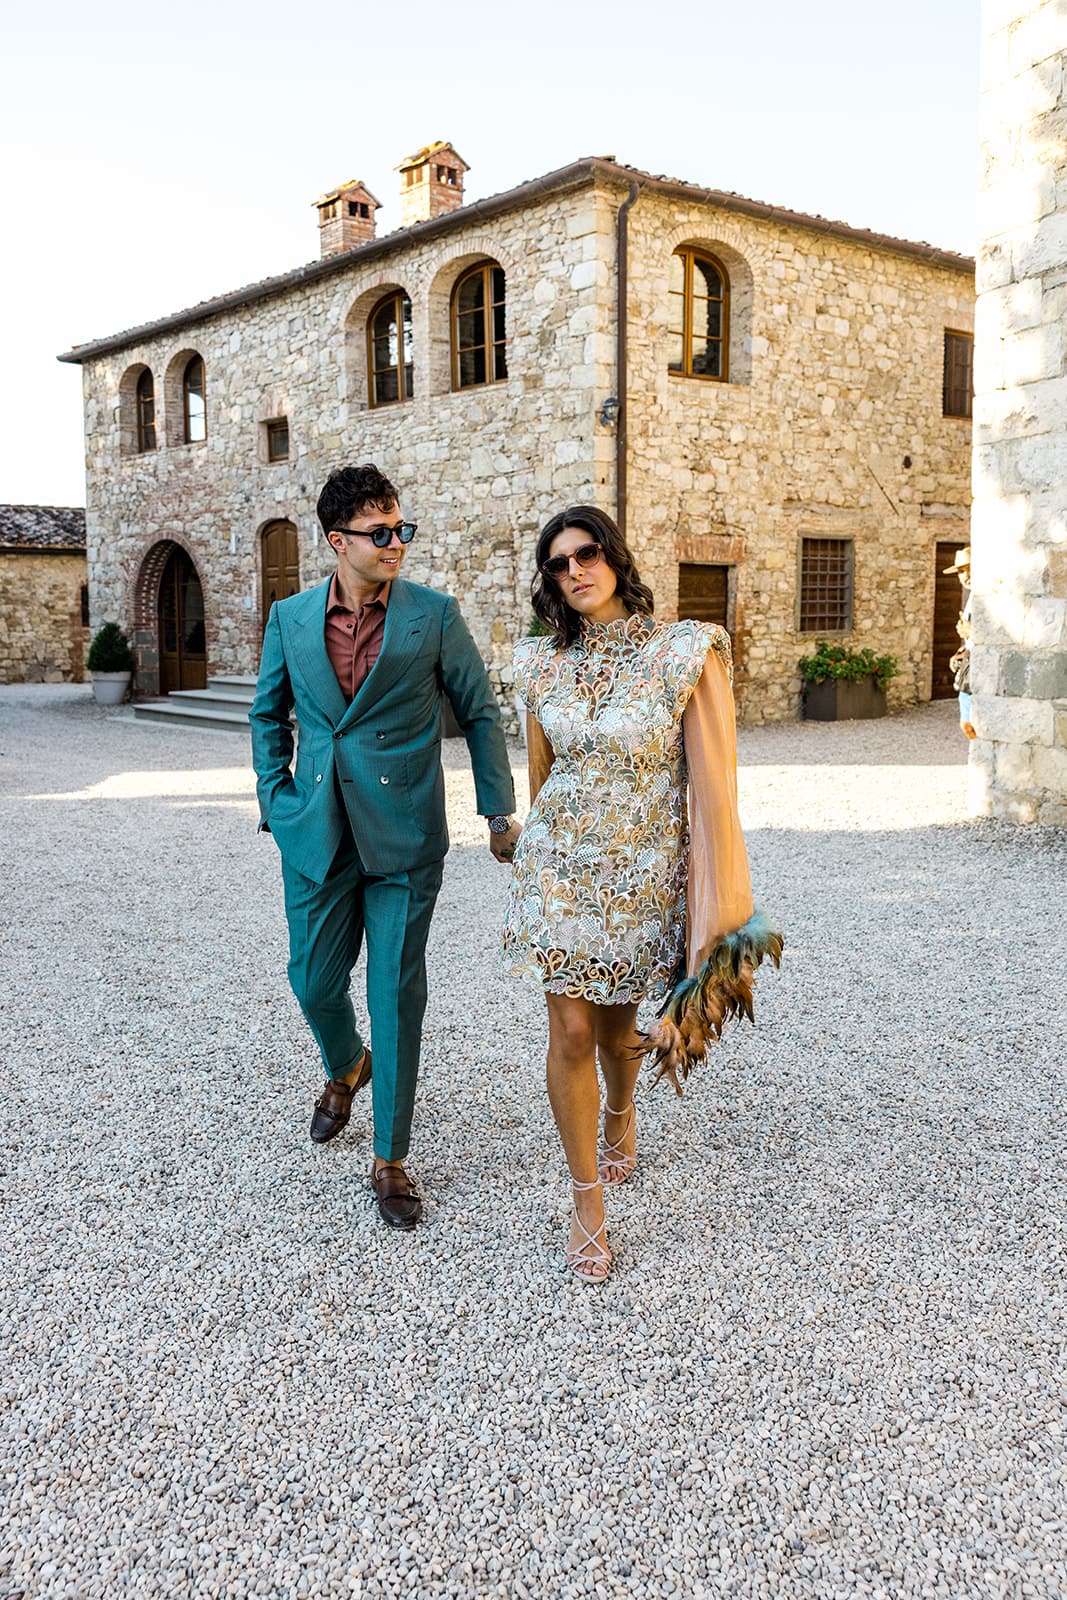 Man and woman walk outside castello la leccia, tuscany italy